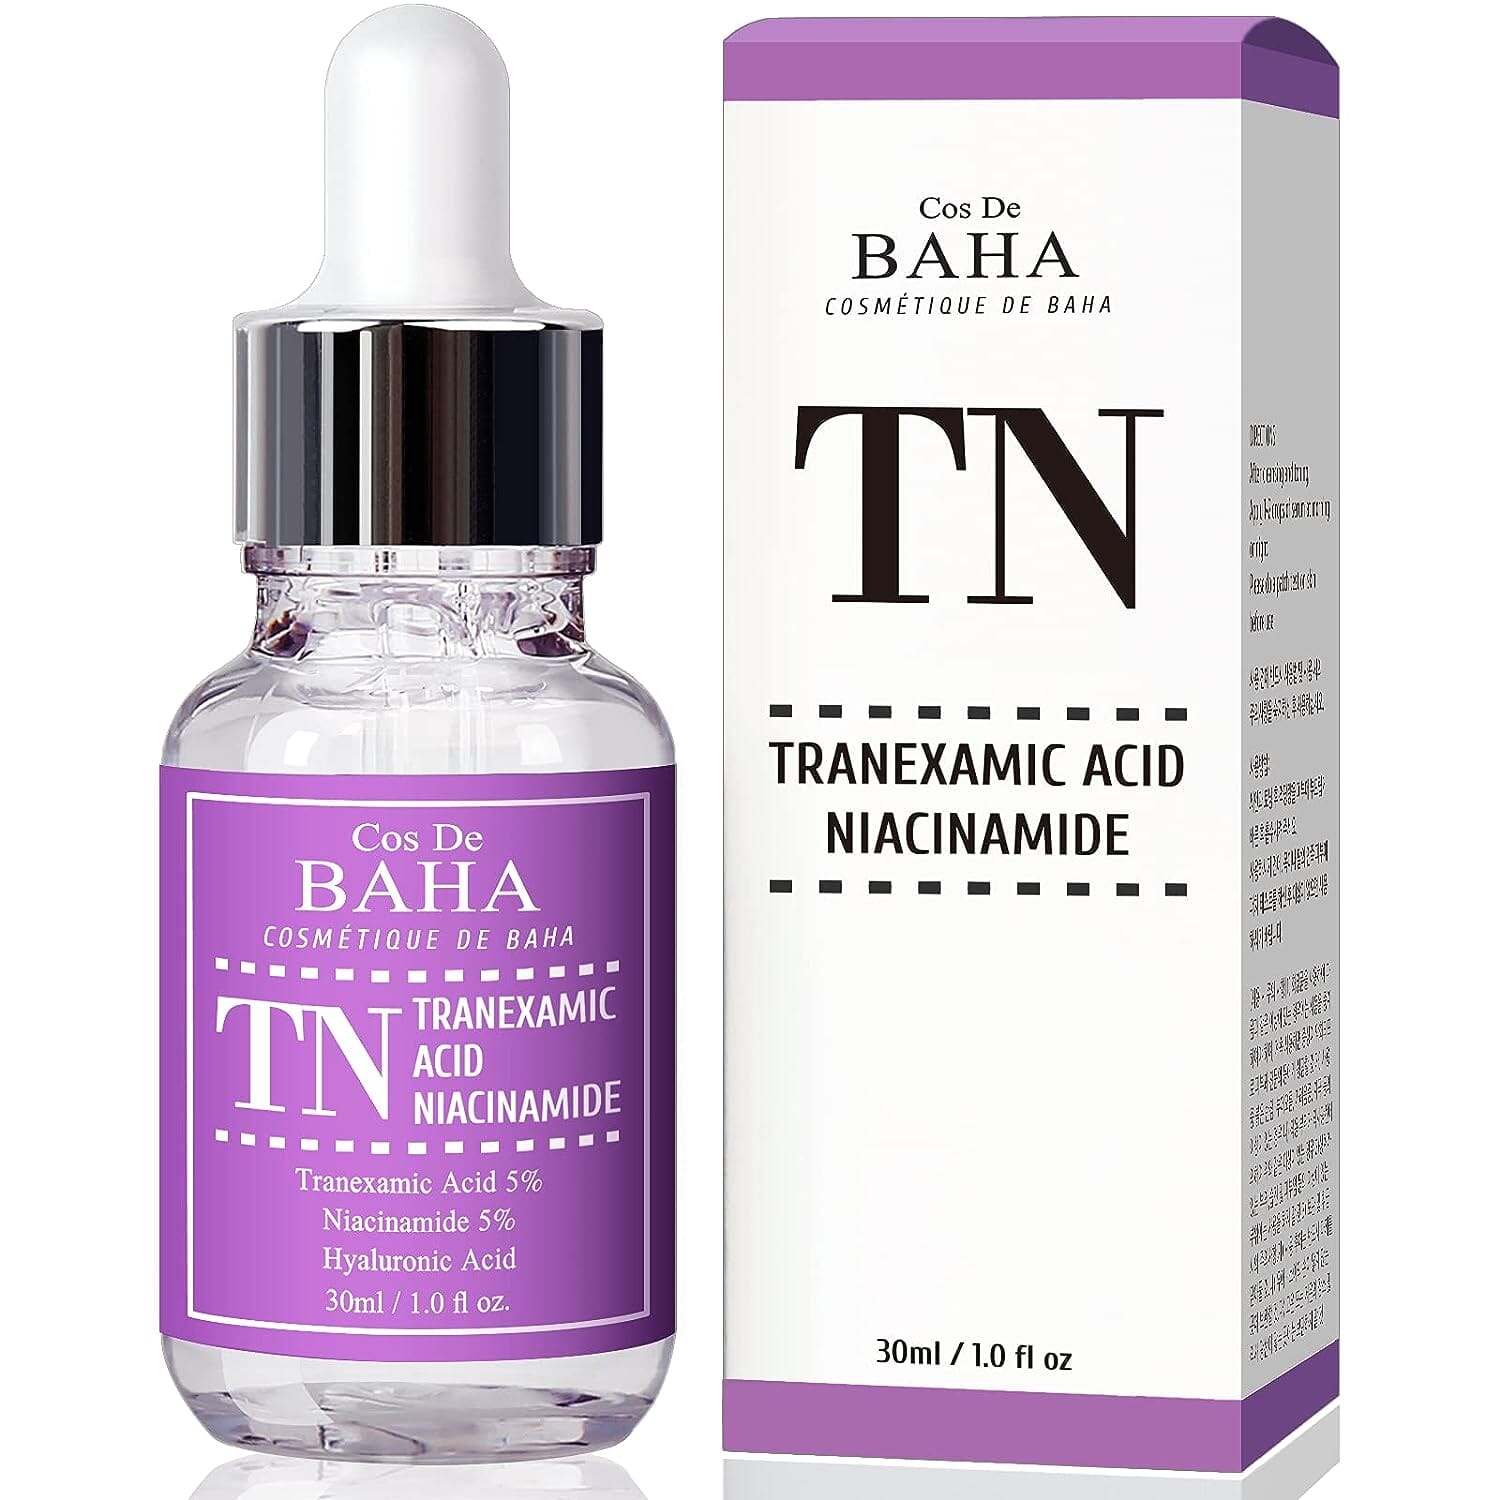 Cos De BAHA TN Tranexamic Acid Niacinamide Serum 30ml Skin Care Cos De BAHA ORION XO Sri Lanka